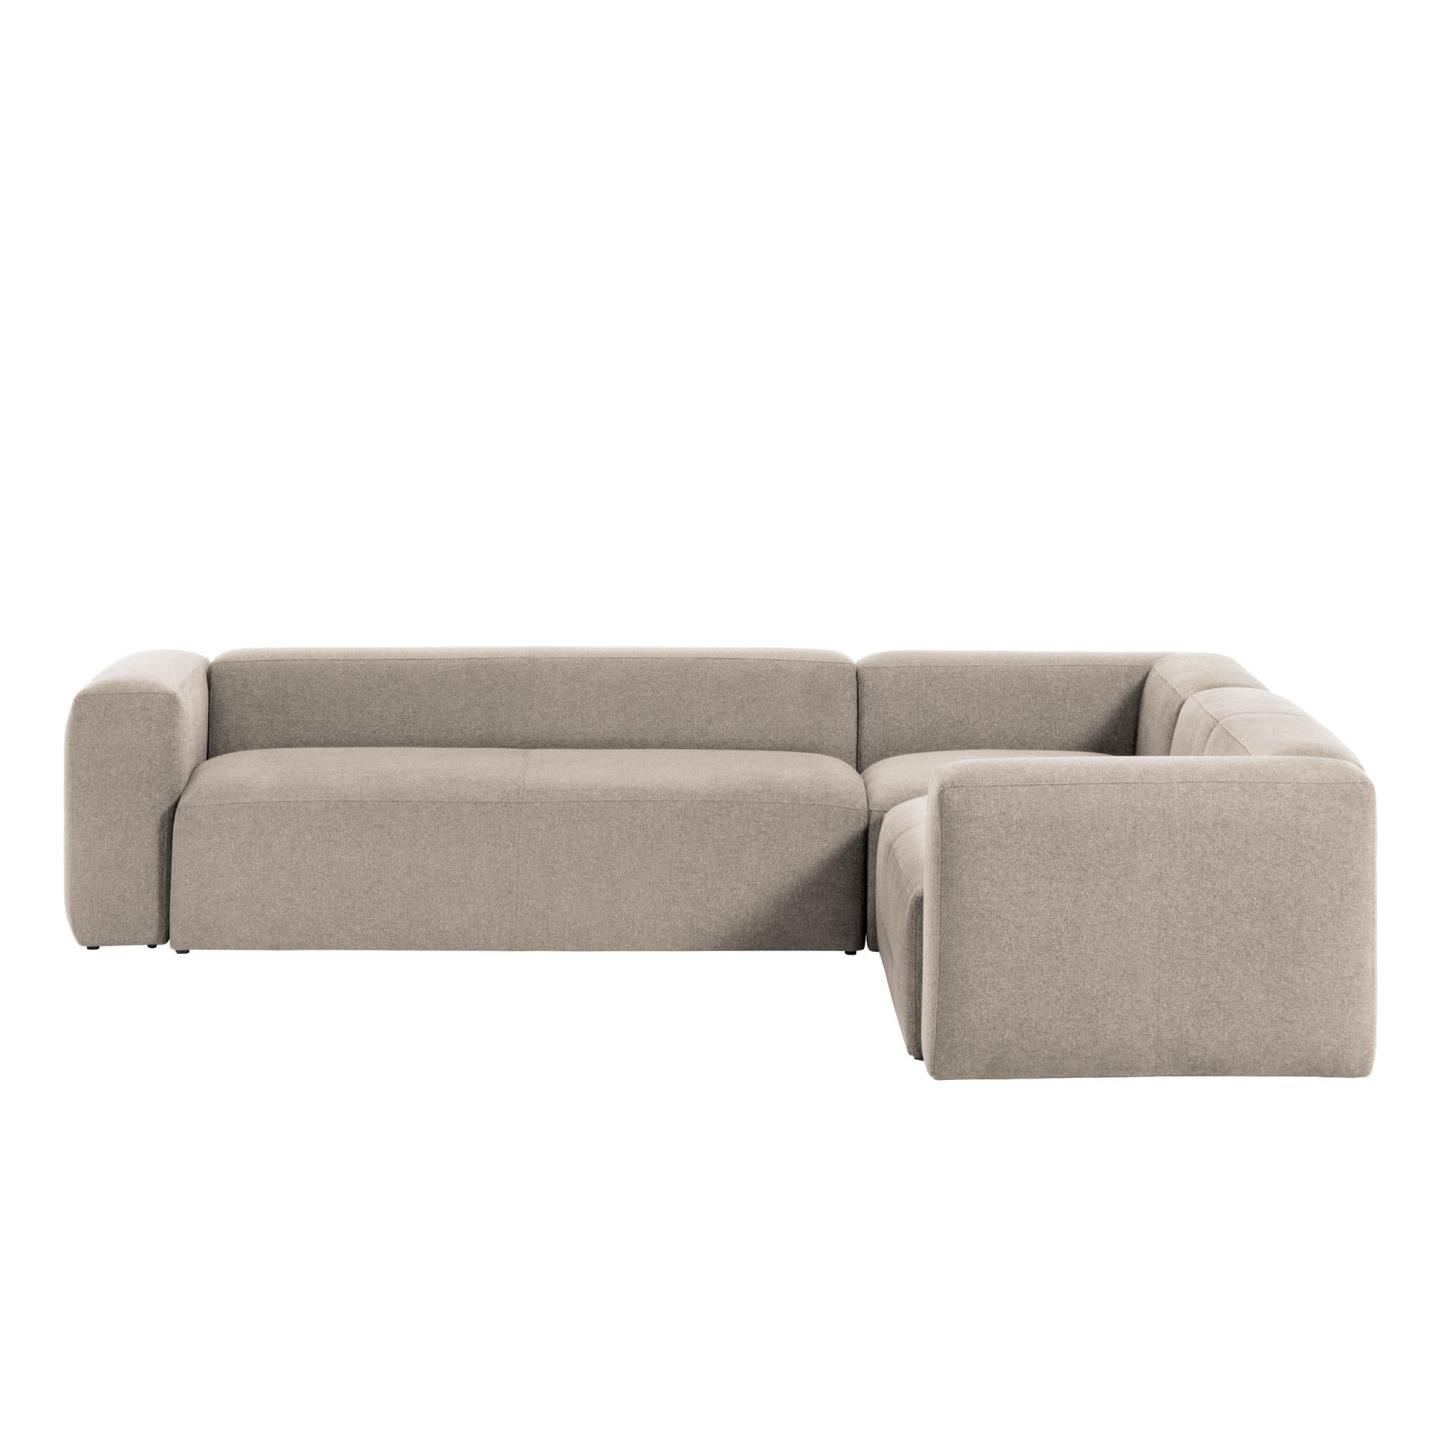 Blok 5 seater corner sofa in beige, 320 x 290 cm / 290 x 320 cm